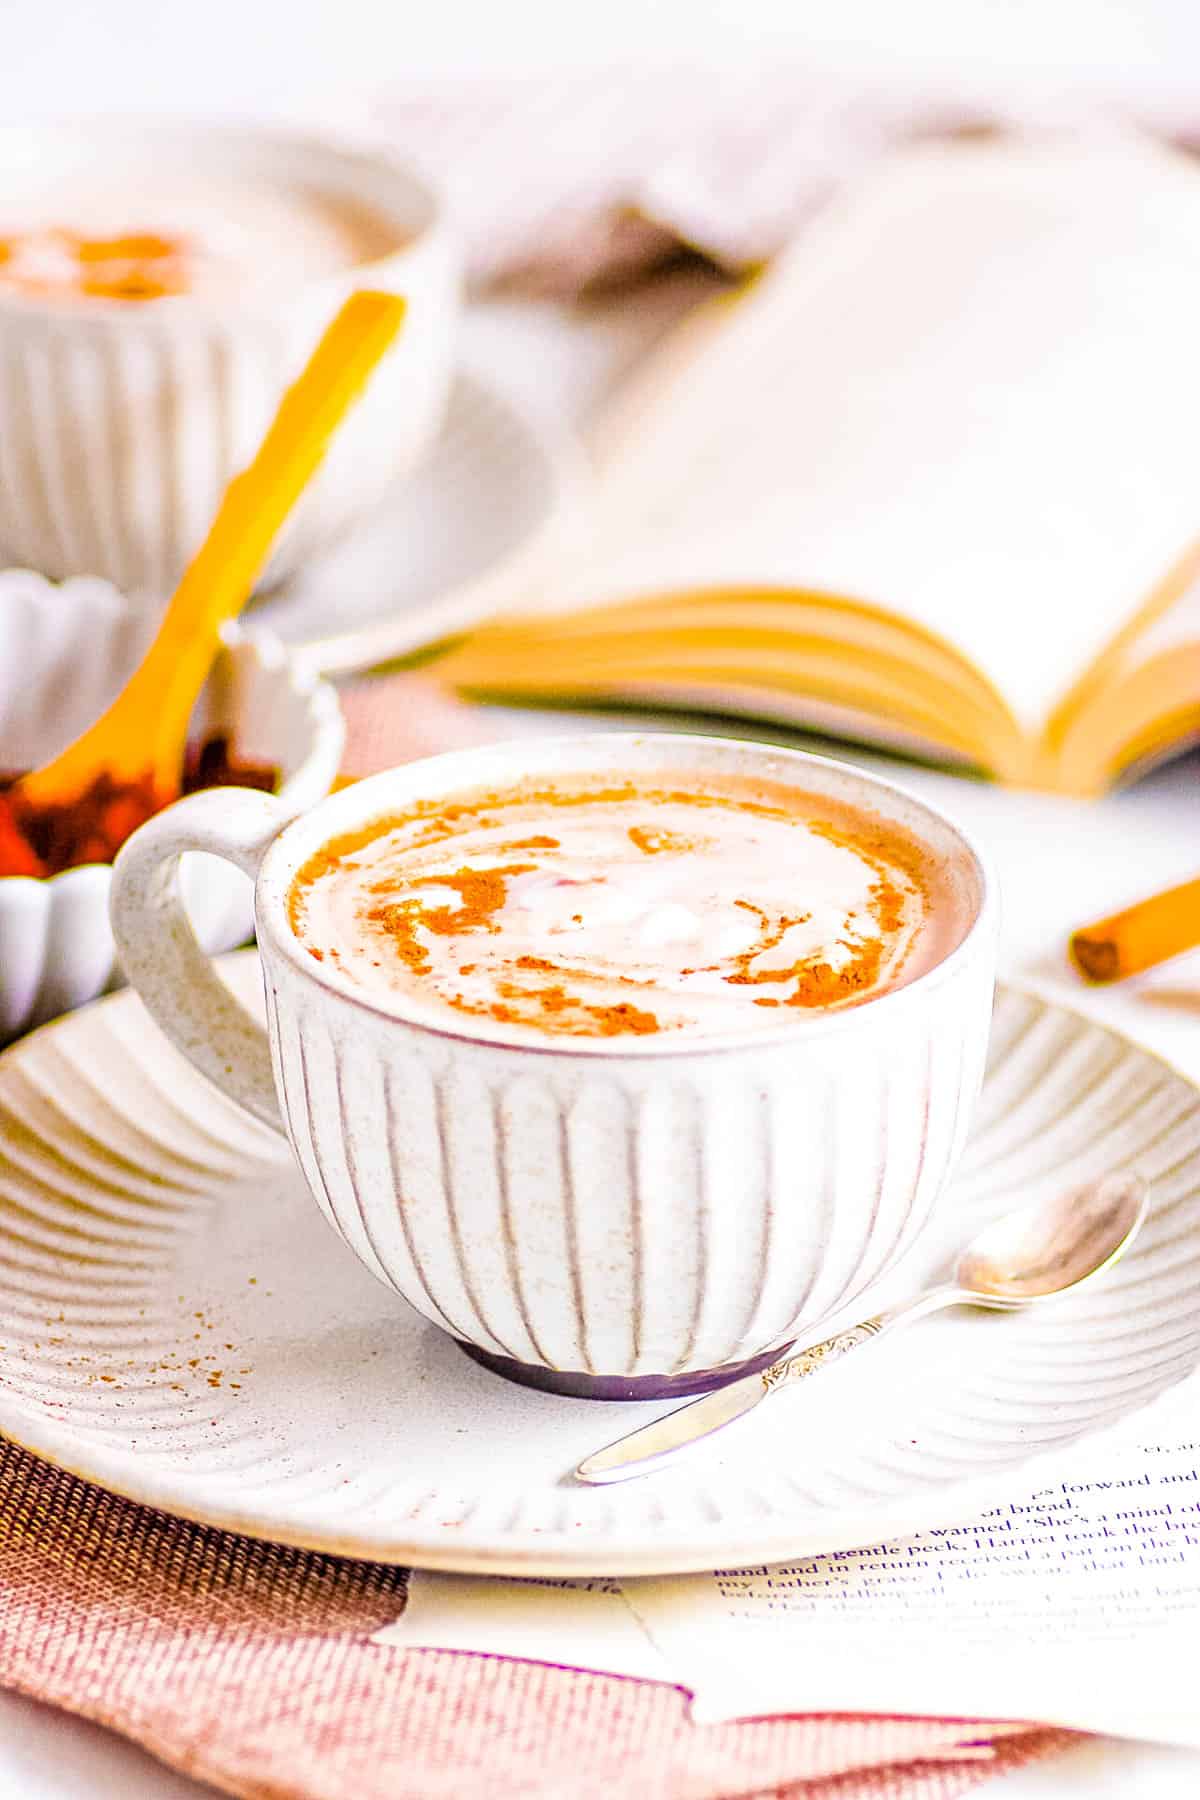 Homemade oat milk hot chocolate in a mug on a saucer.